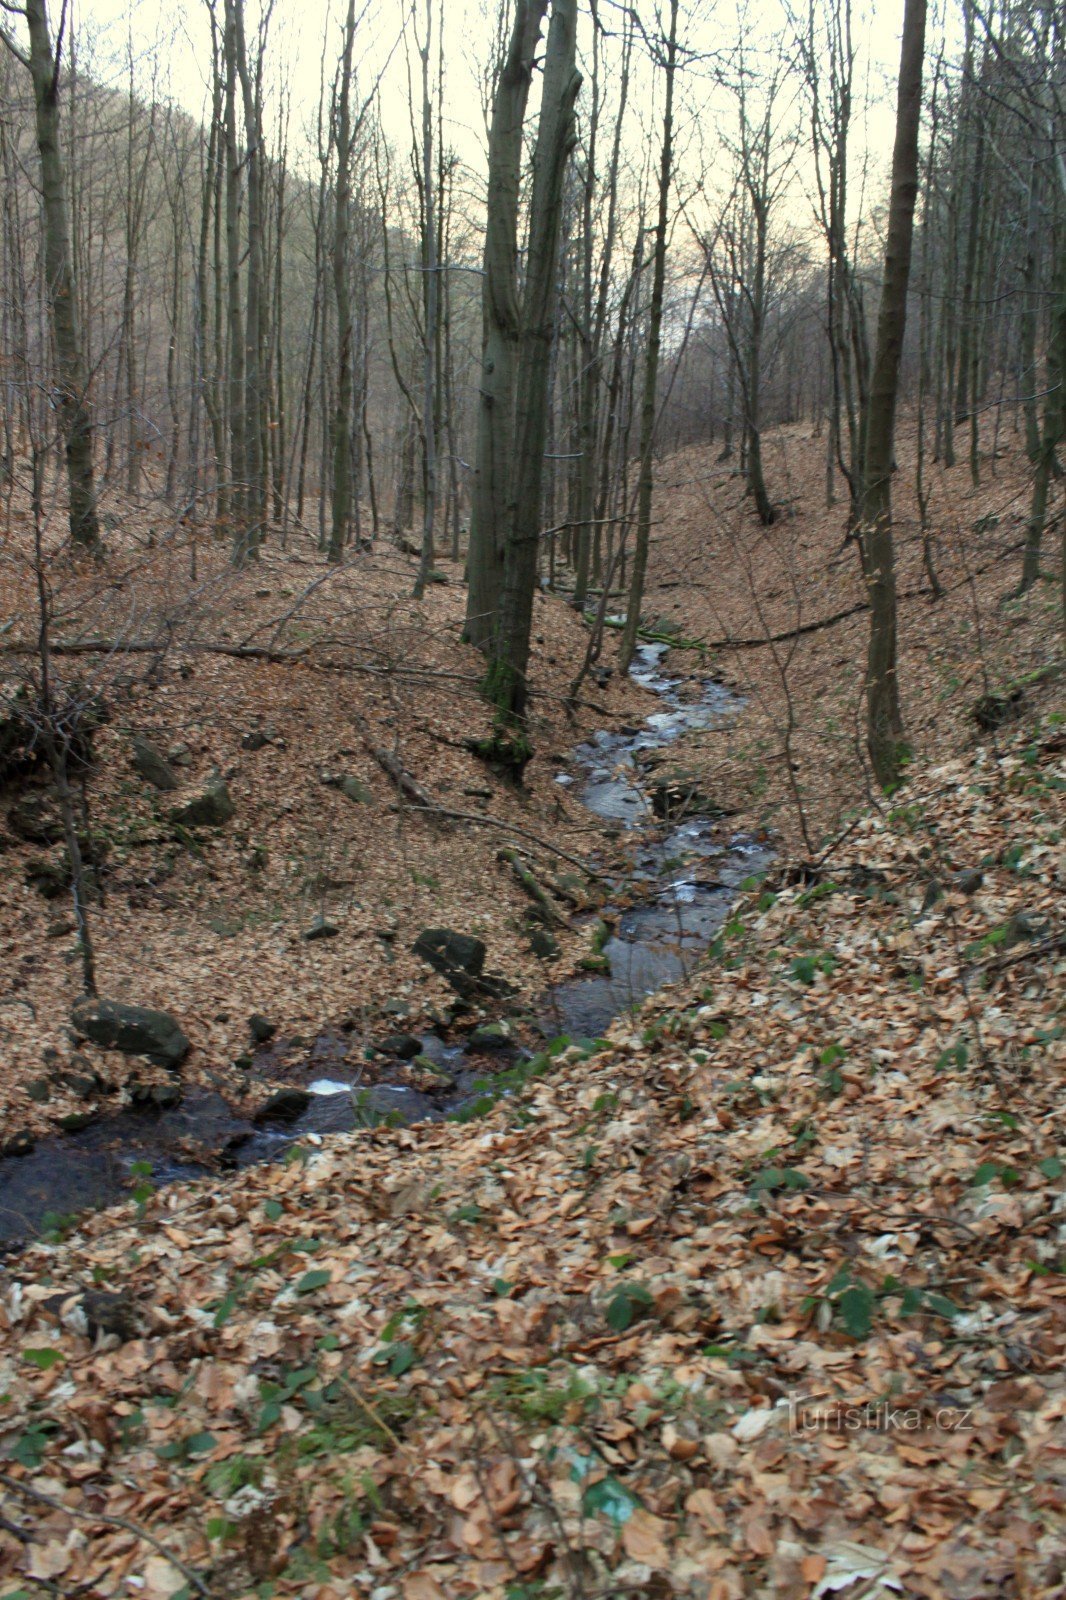 The valley of the Unčín stream